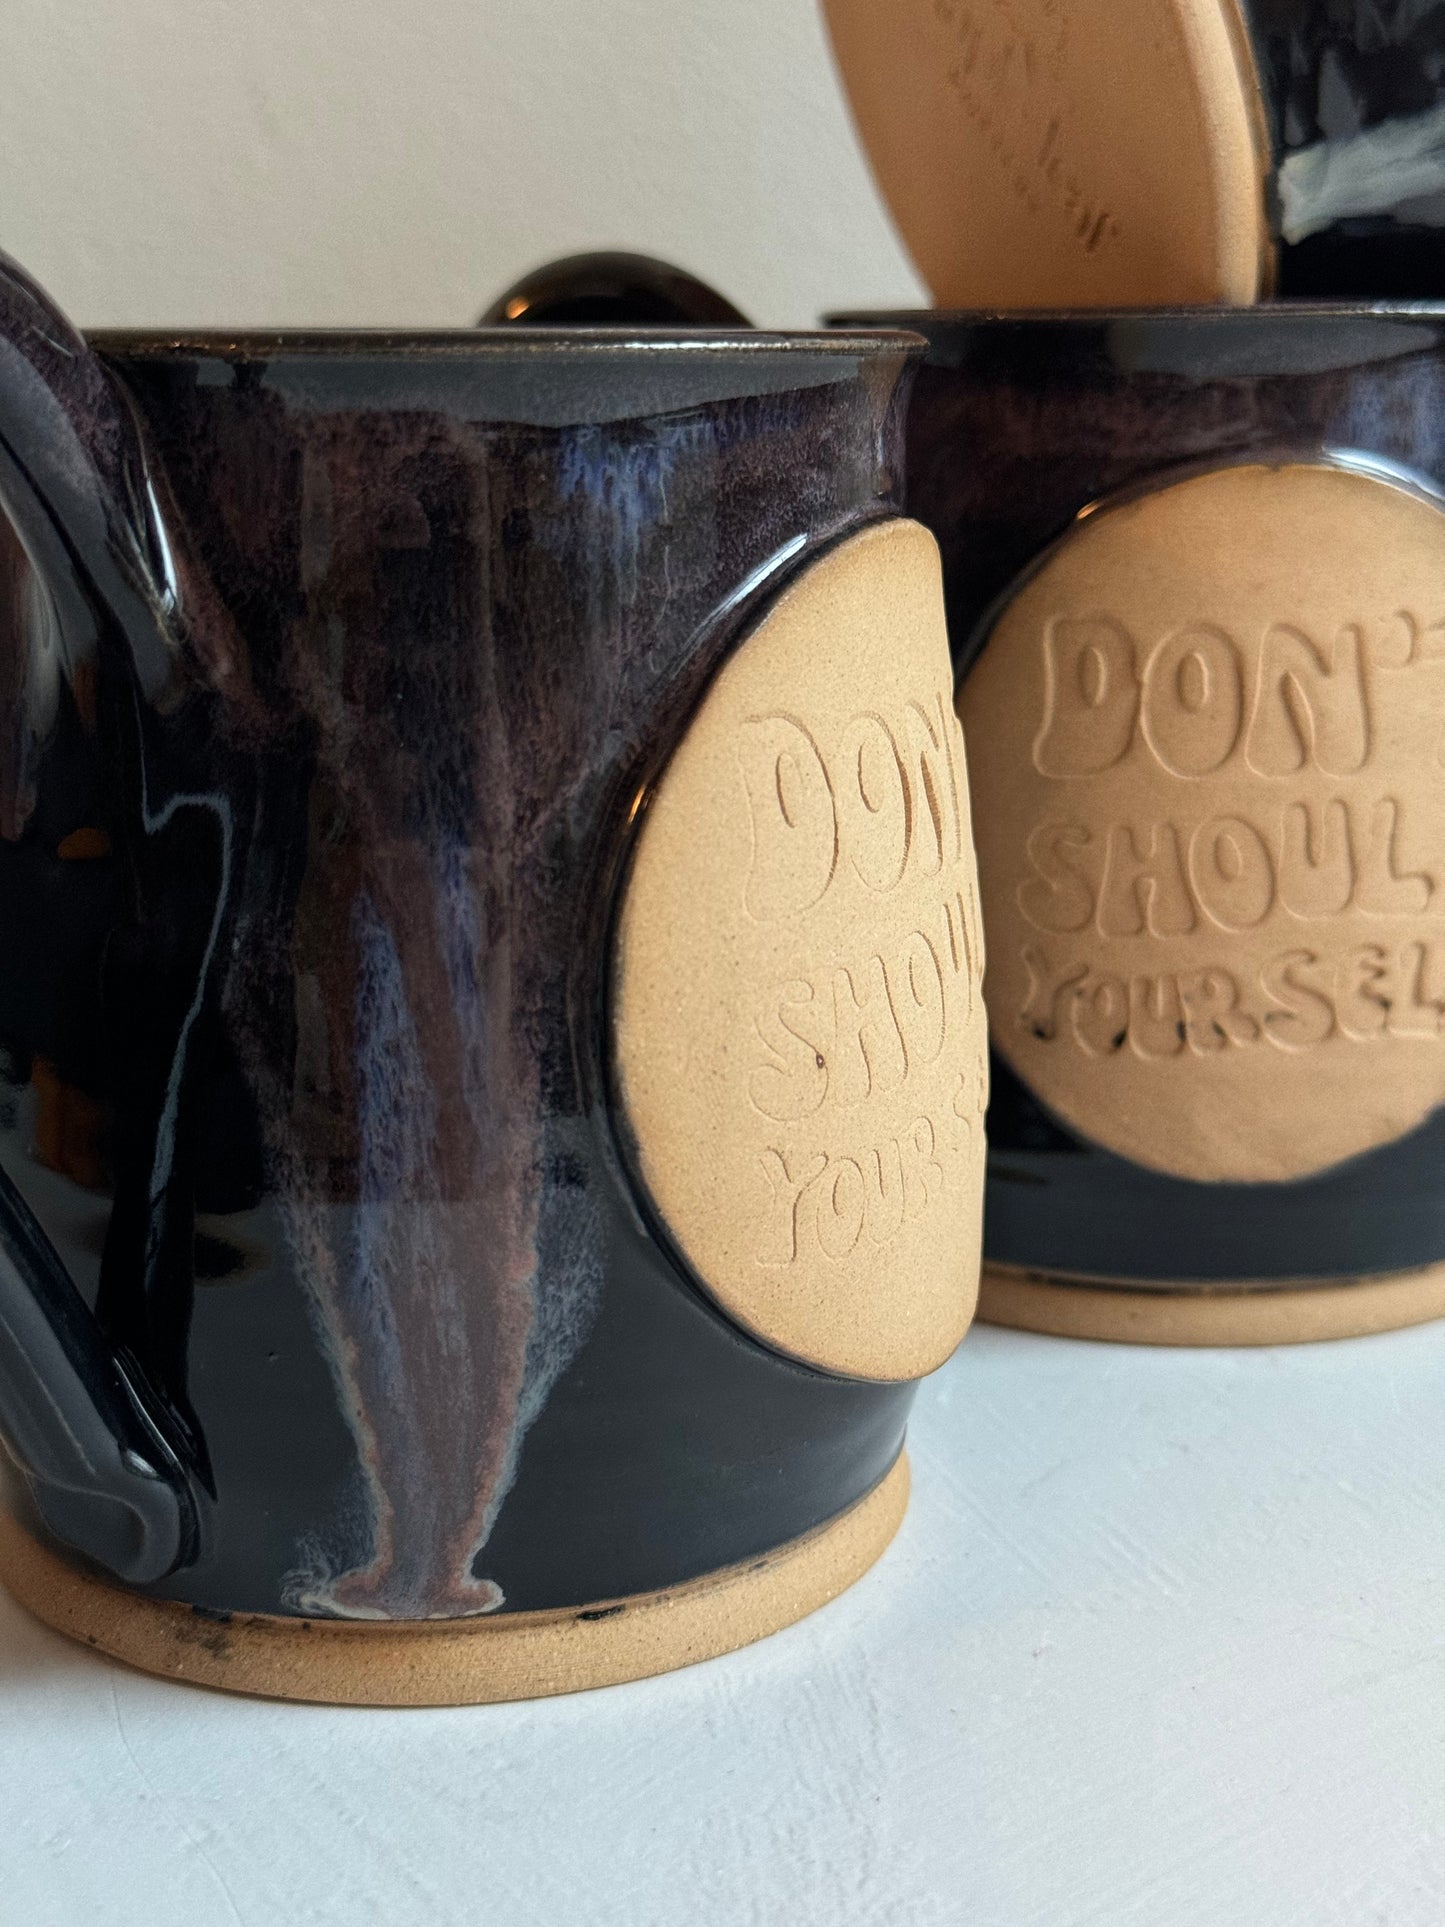 Don’t Should Yourself Mug